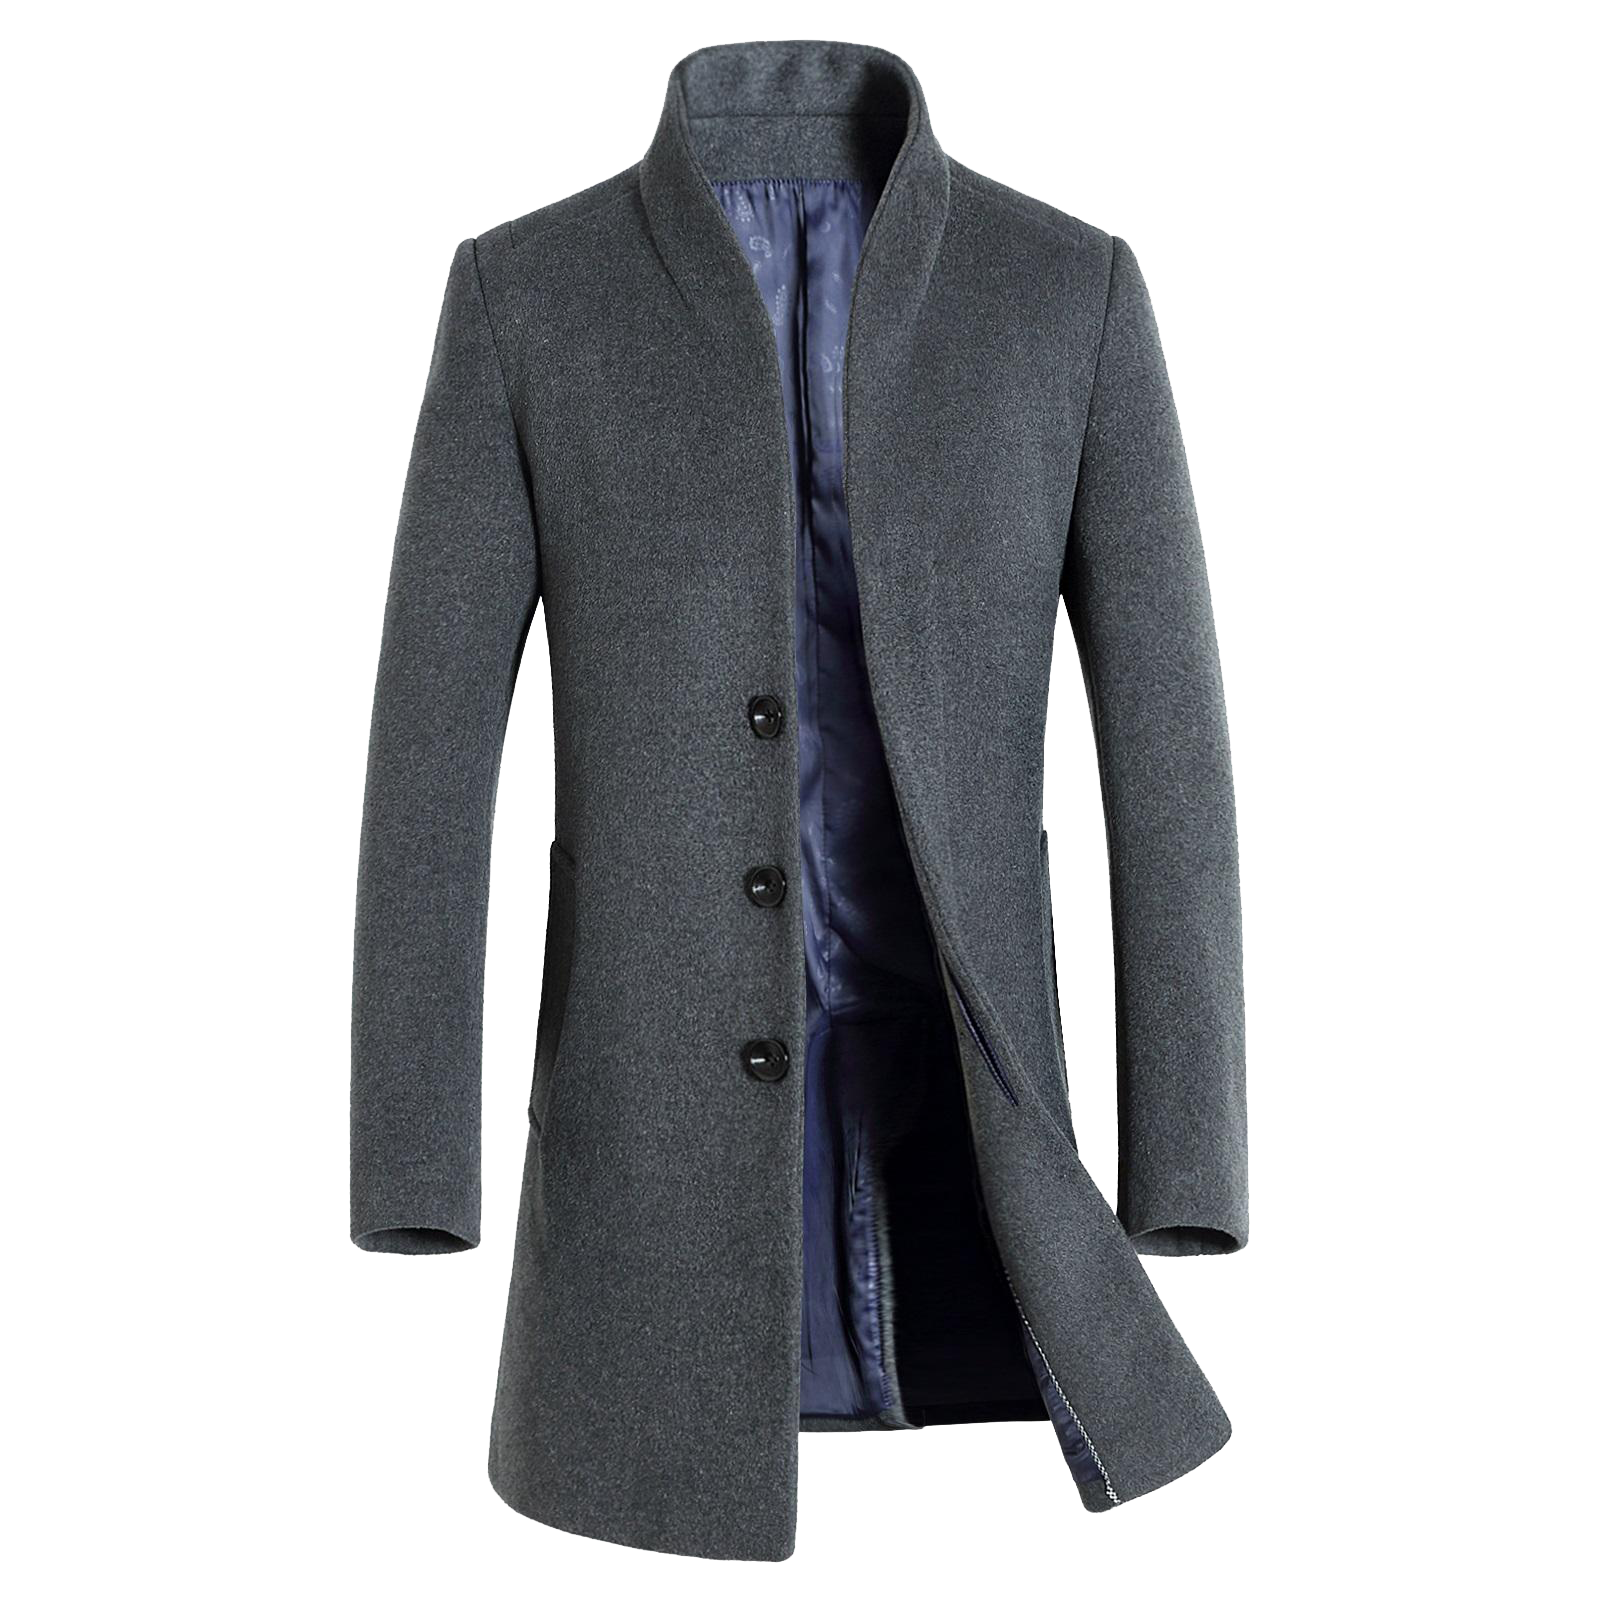 Coat clipart wool coat, Coat wool coat Transparent FREE for download on ...